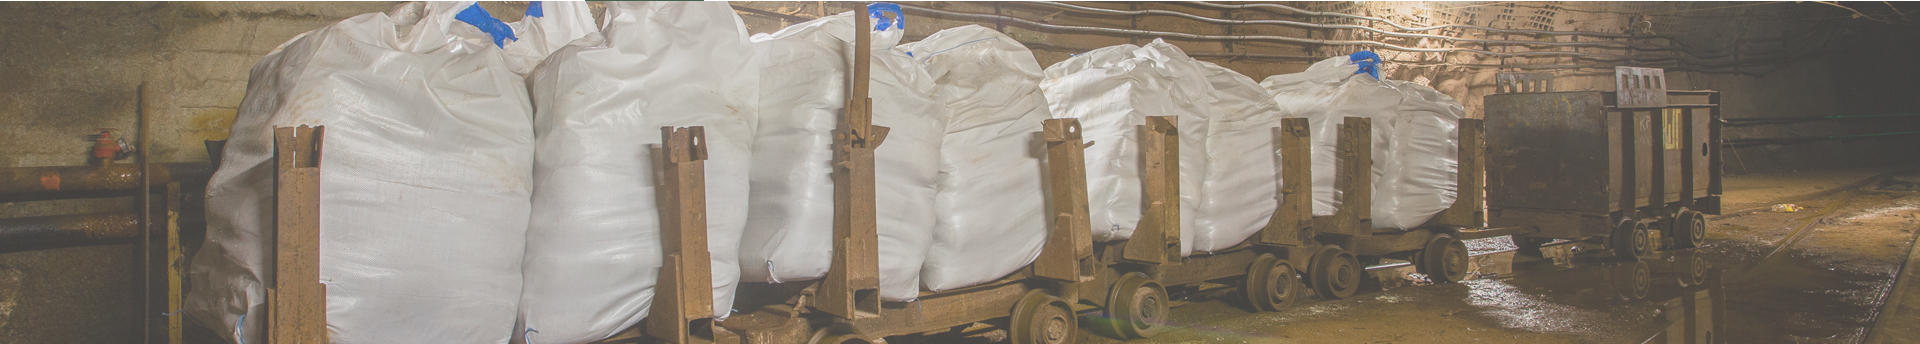 FIBC bulk bags for construction.